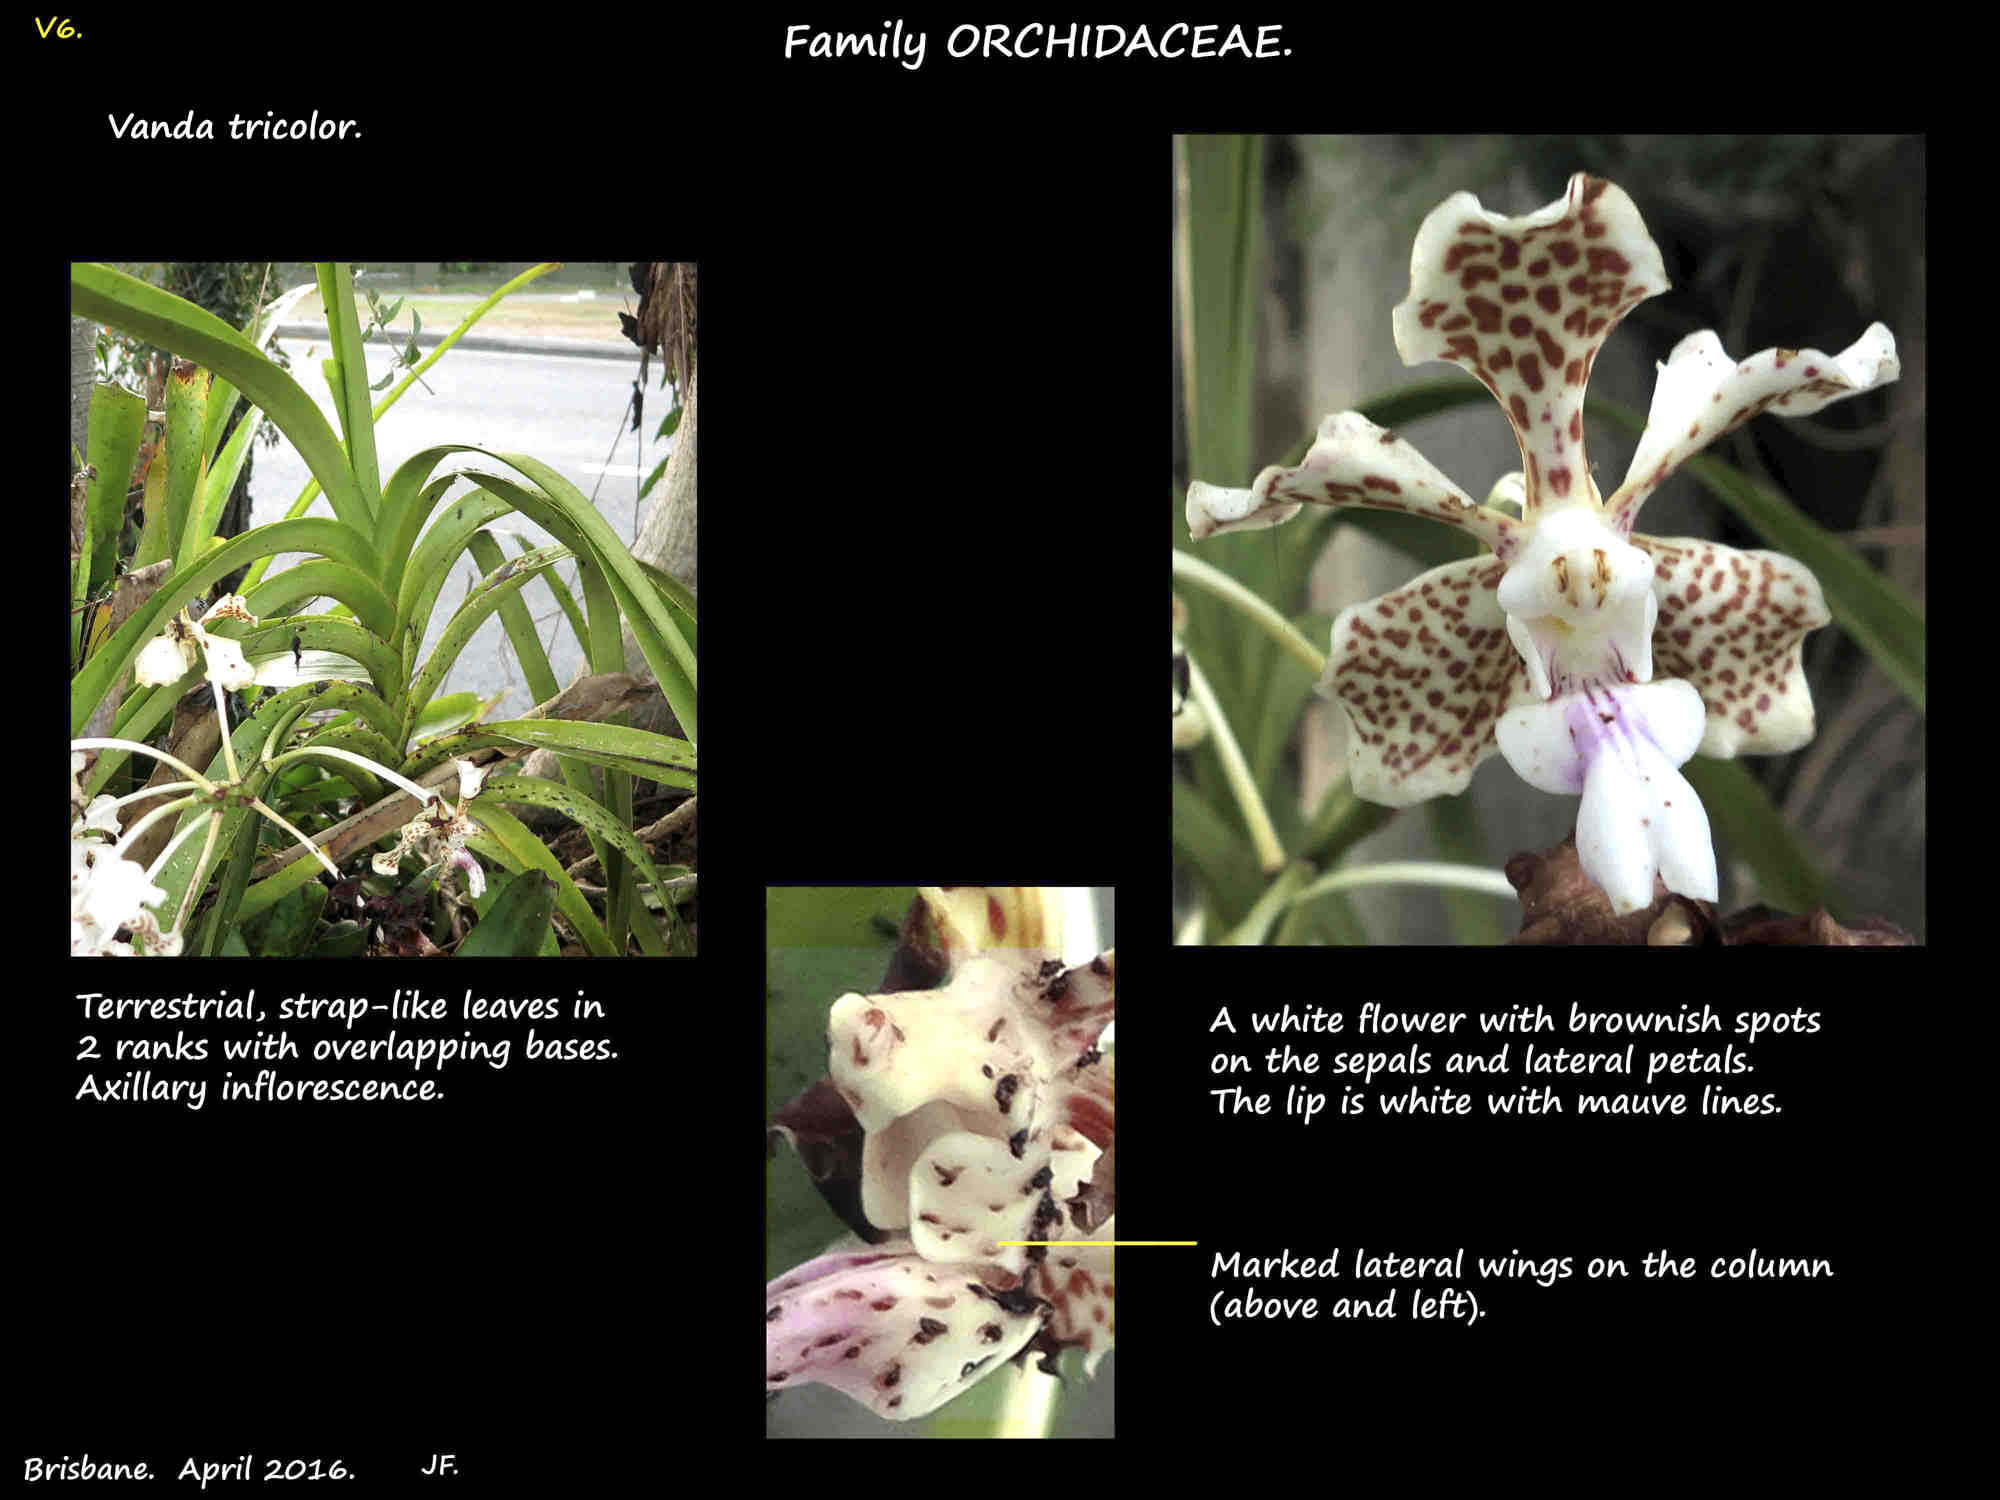 1 Vanda tricolor orchids